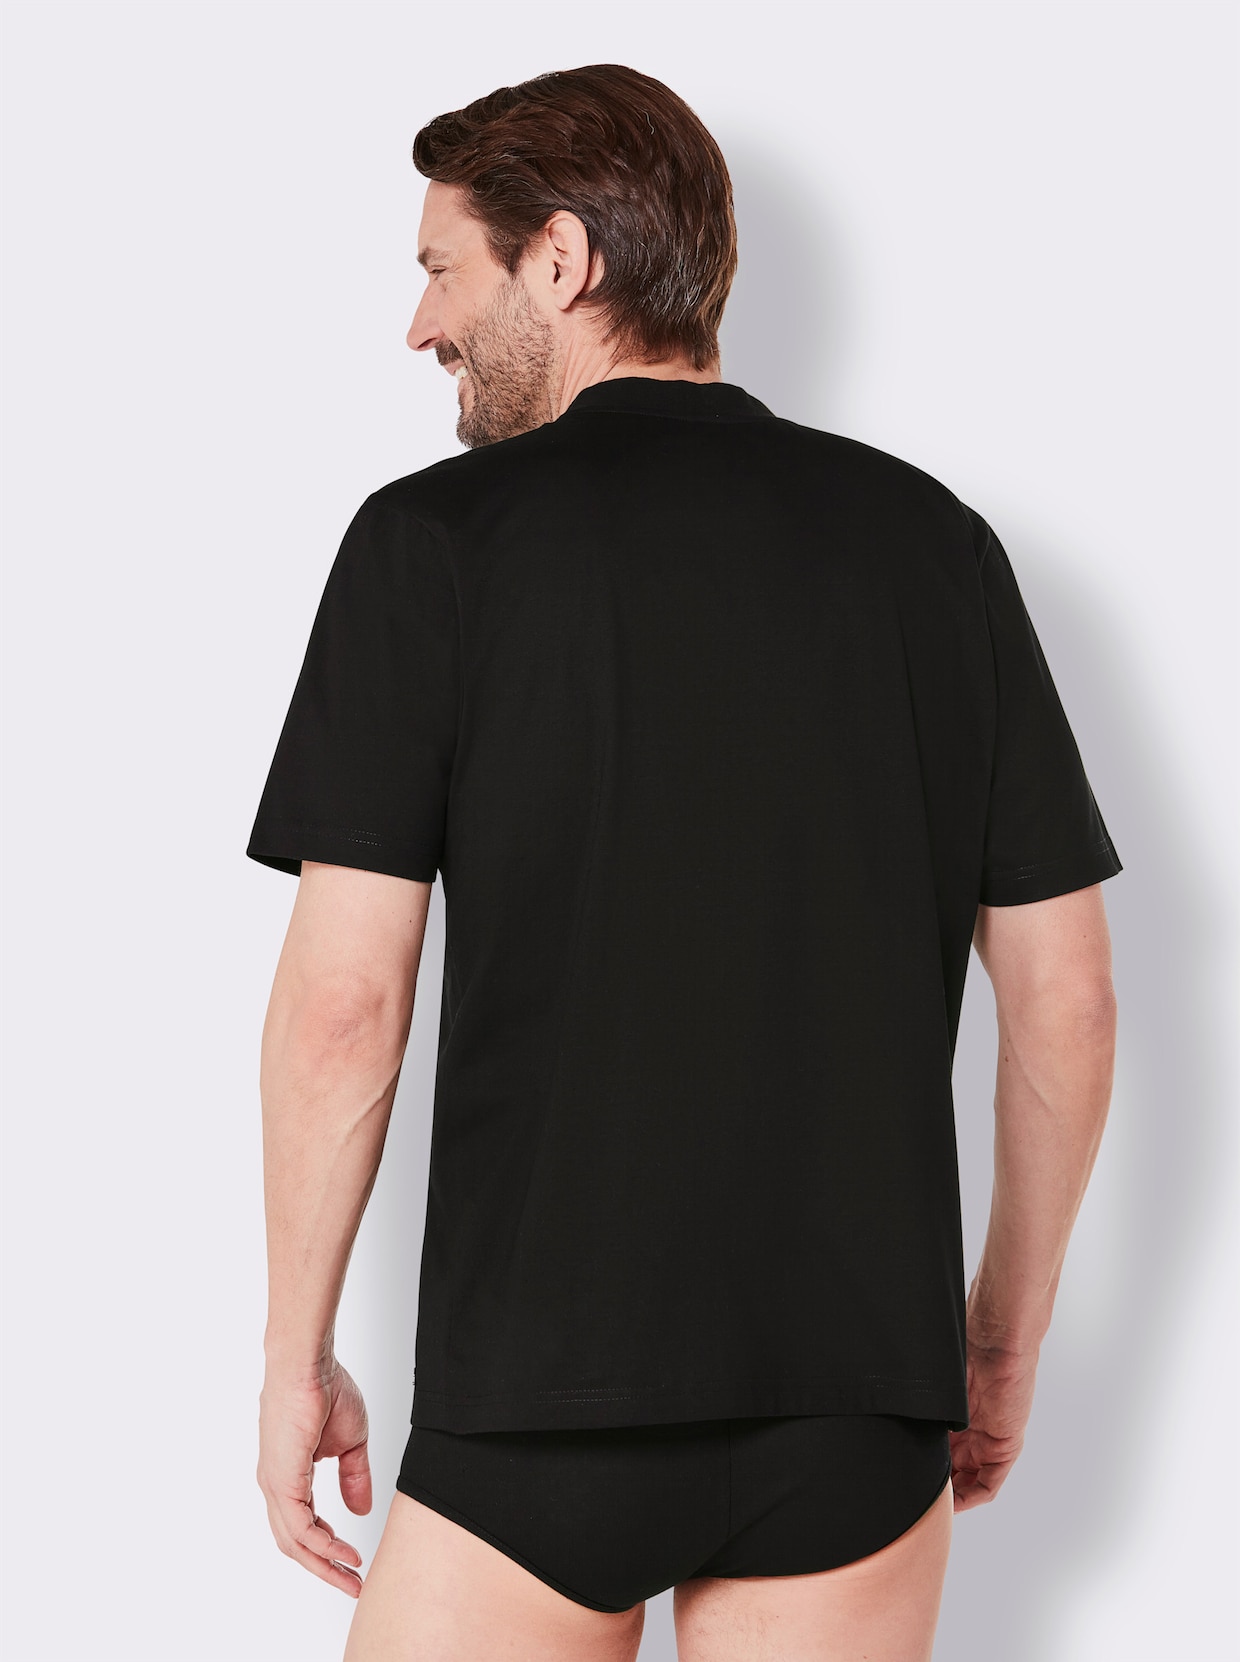 KINGsCLUB Shirt - schwarz + grau-meliert + marine